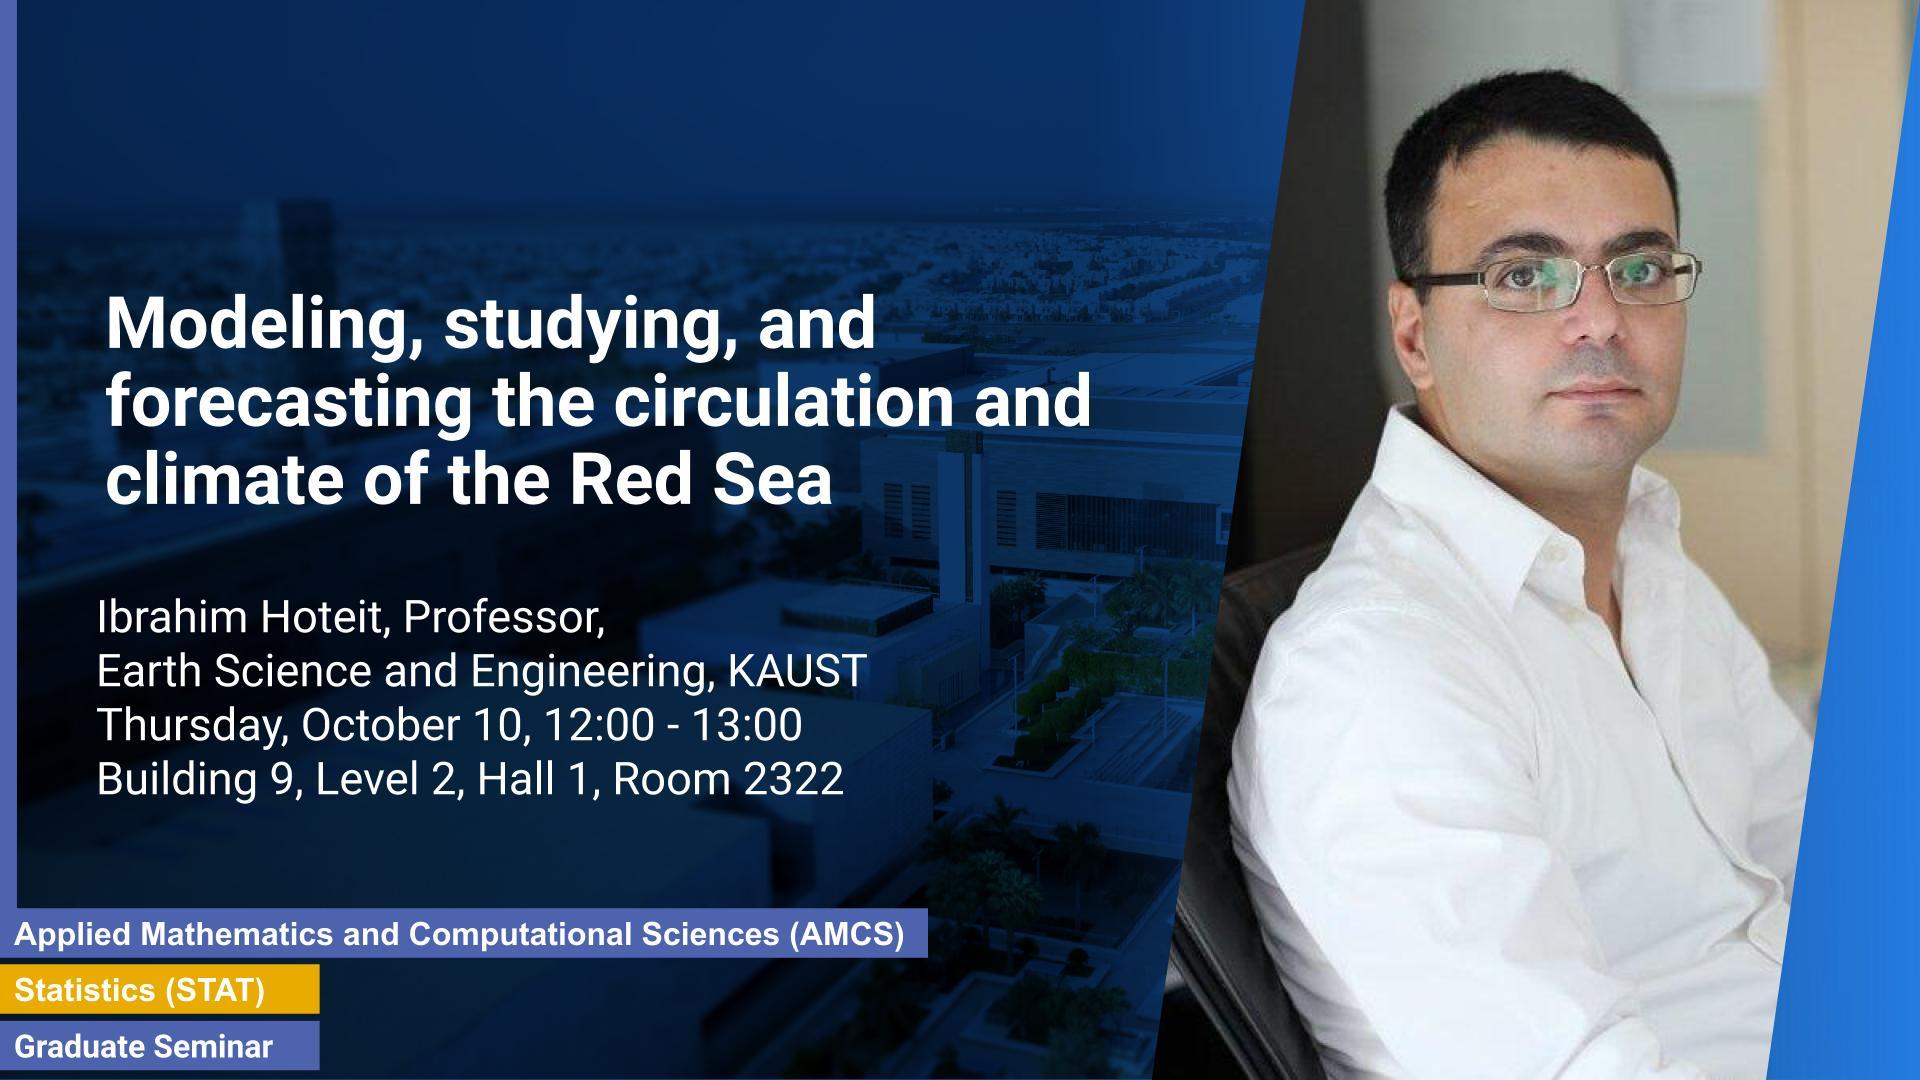 KAUST PSE ERSE Graduate Seminar Ibrahim Hoteit modeling studying forecasting circulation climate Red Sea